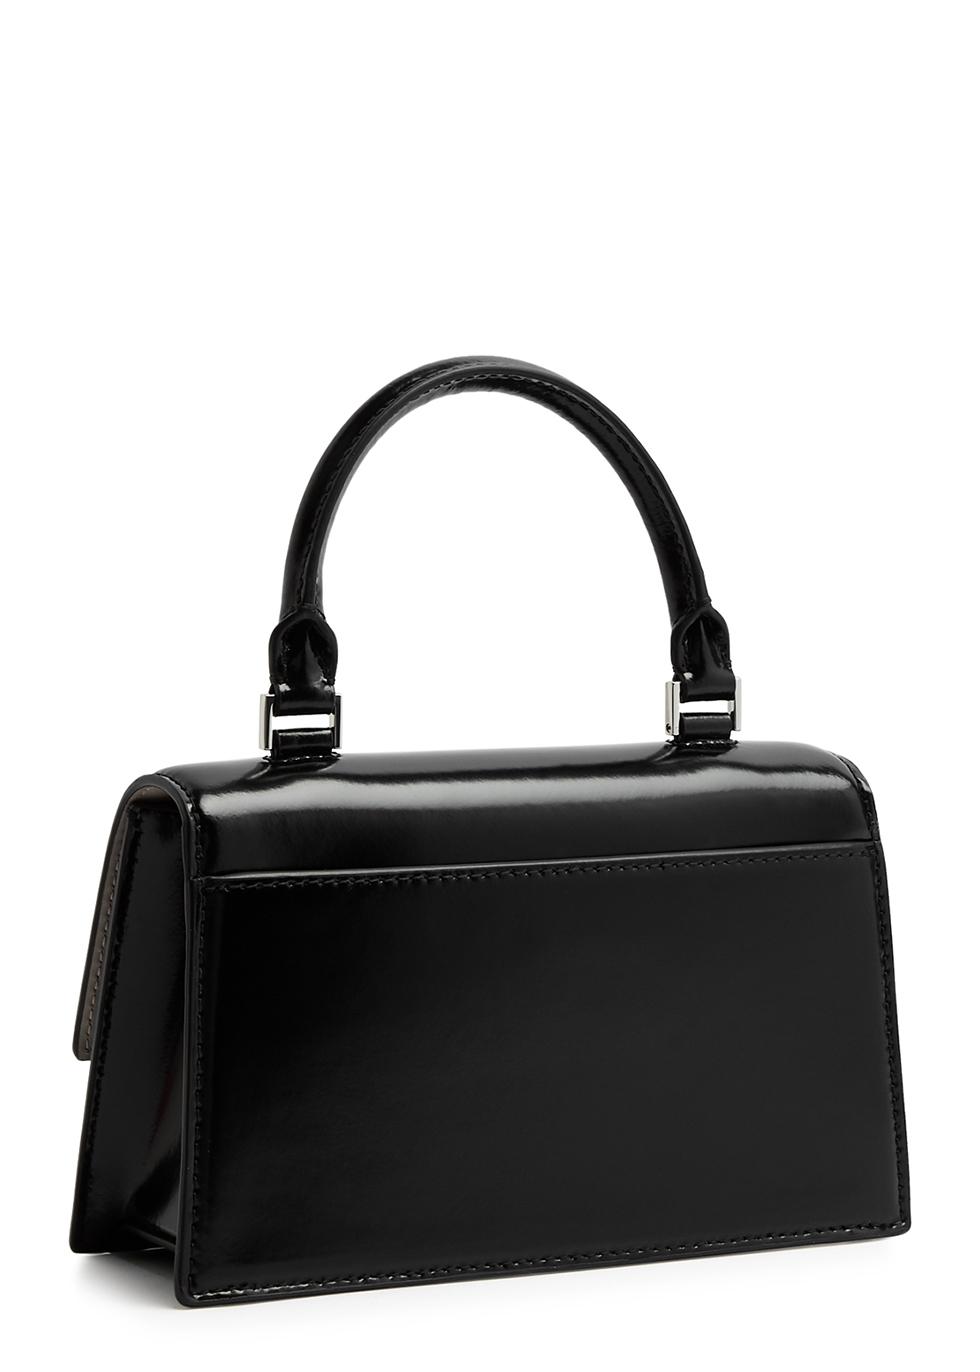 Trend Spazzolato Mini Bag - Tory Burch - Leather - Grey